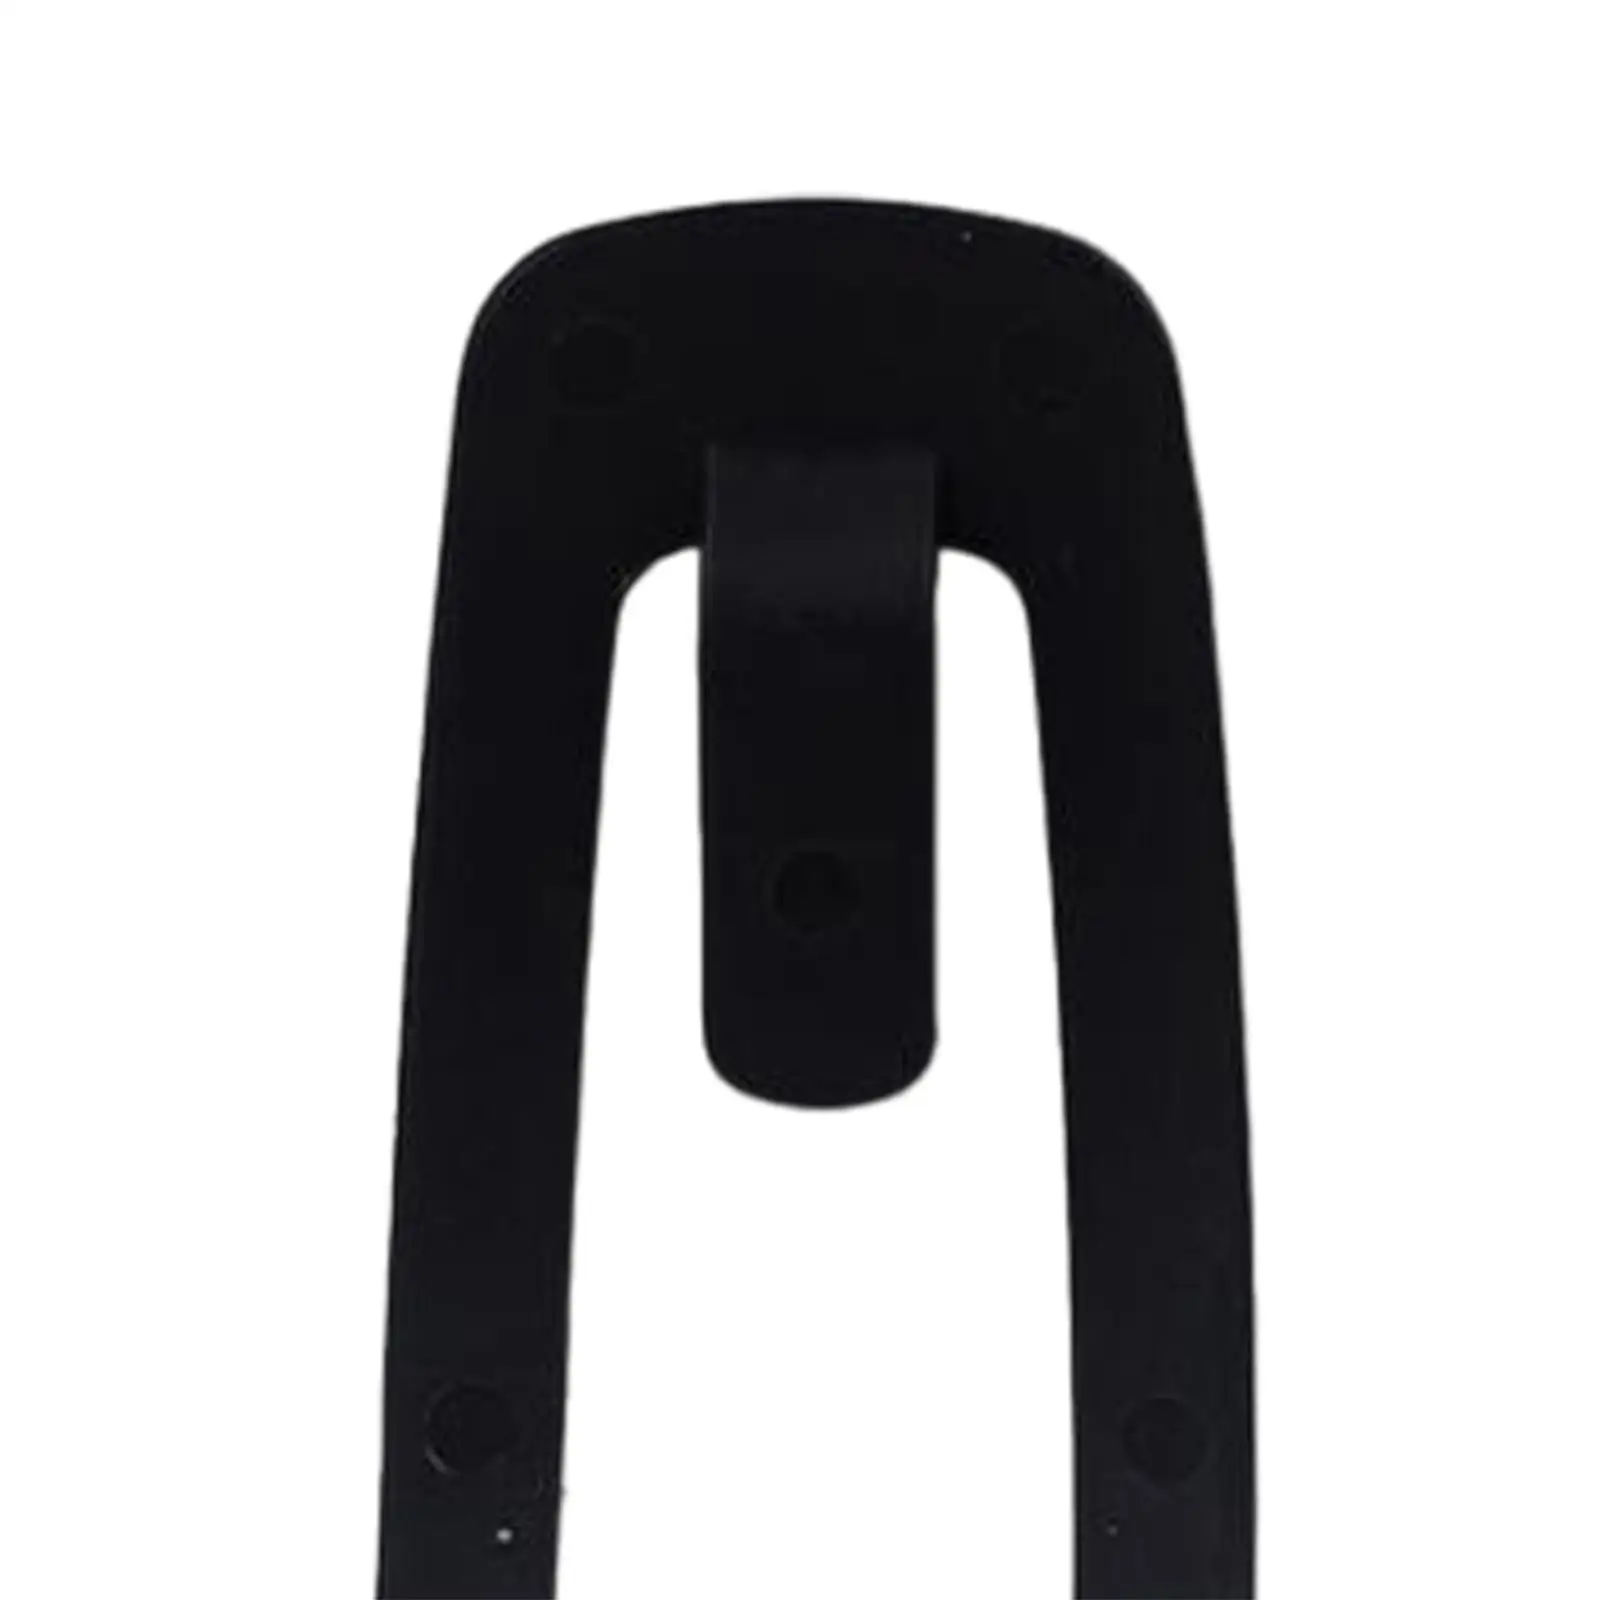 Ski Helmets Goggles Belt Buckle Outdoor Accessory Lightweight Black for Skier